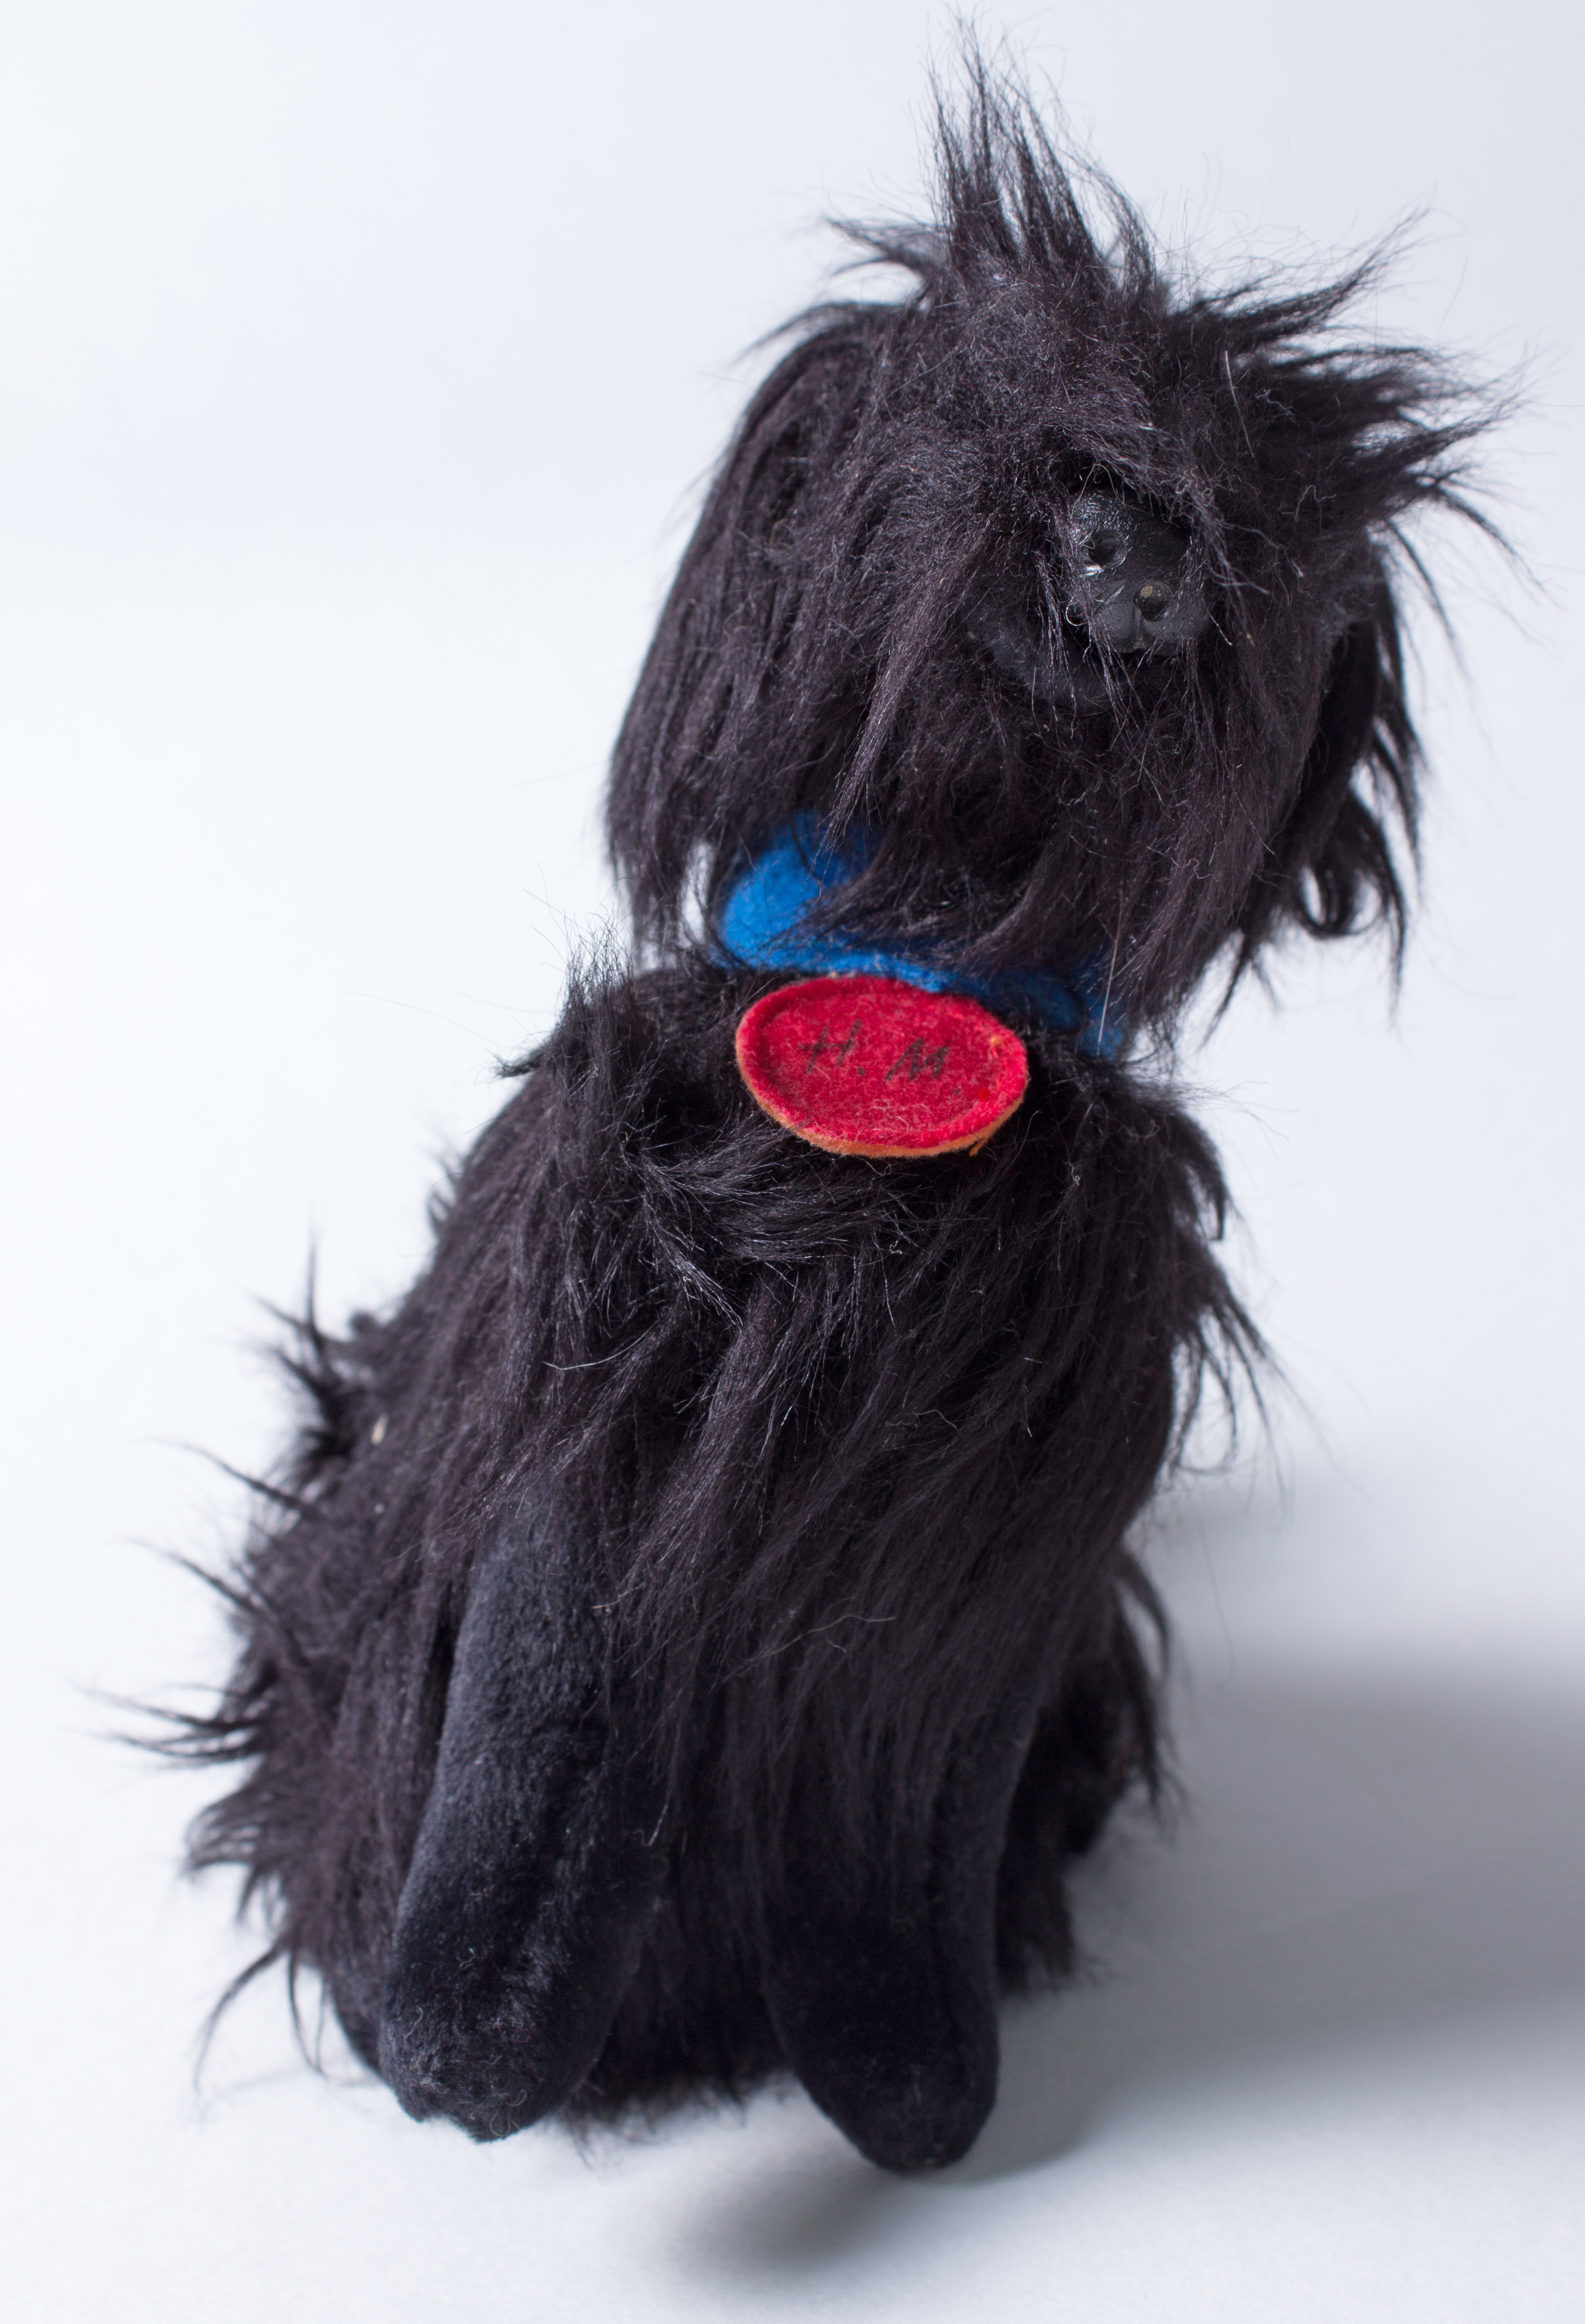 hairy maclary soft toy dog